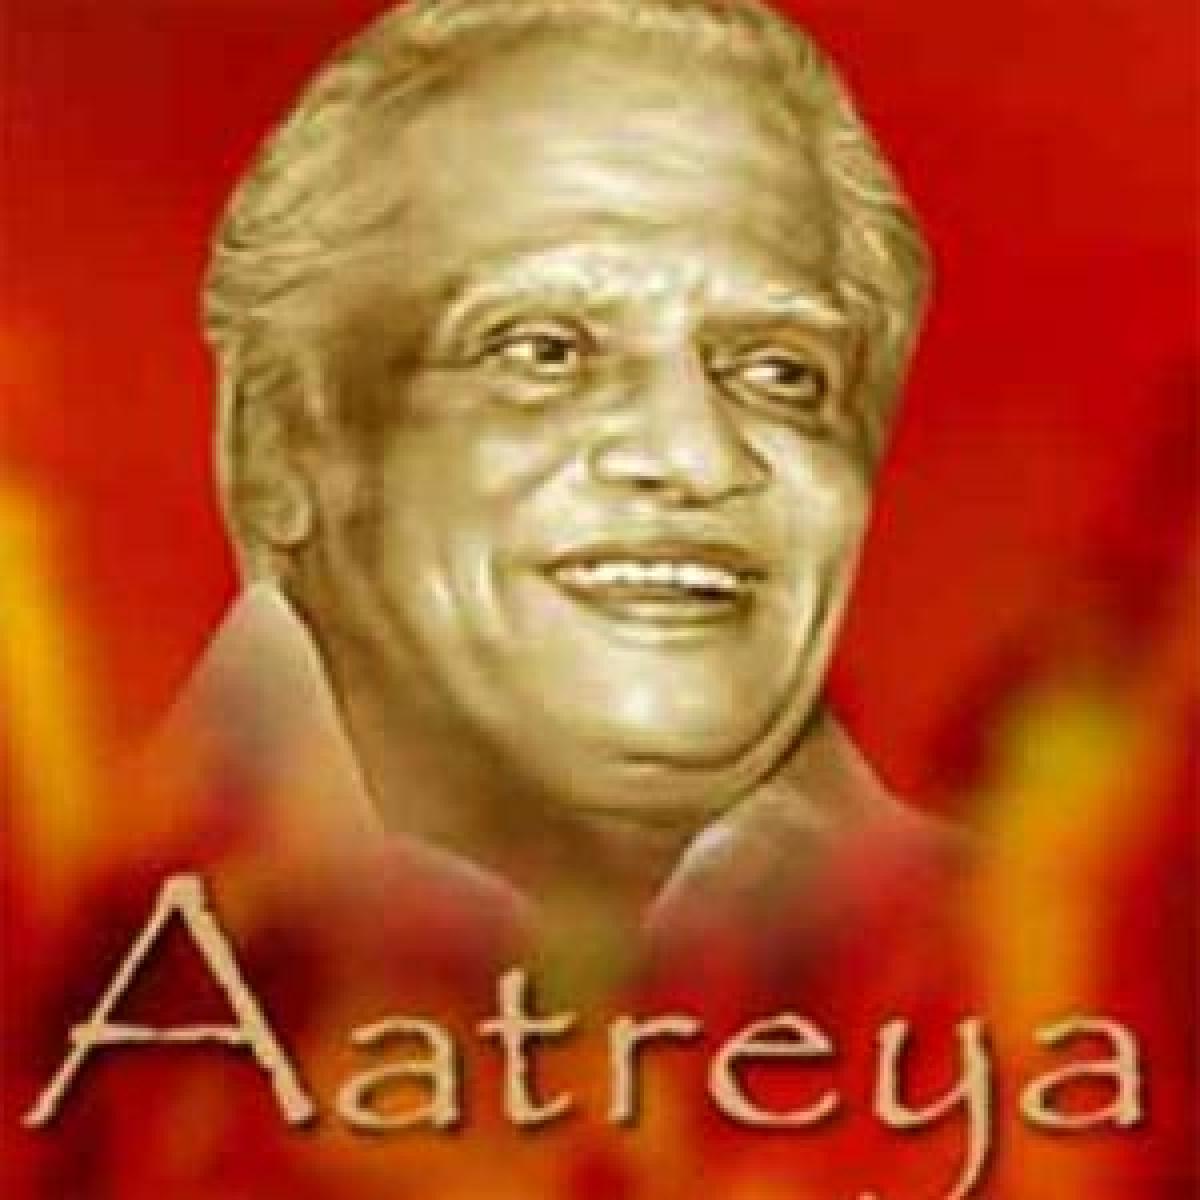 Compilation of Acharya Athreya lyrics released